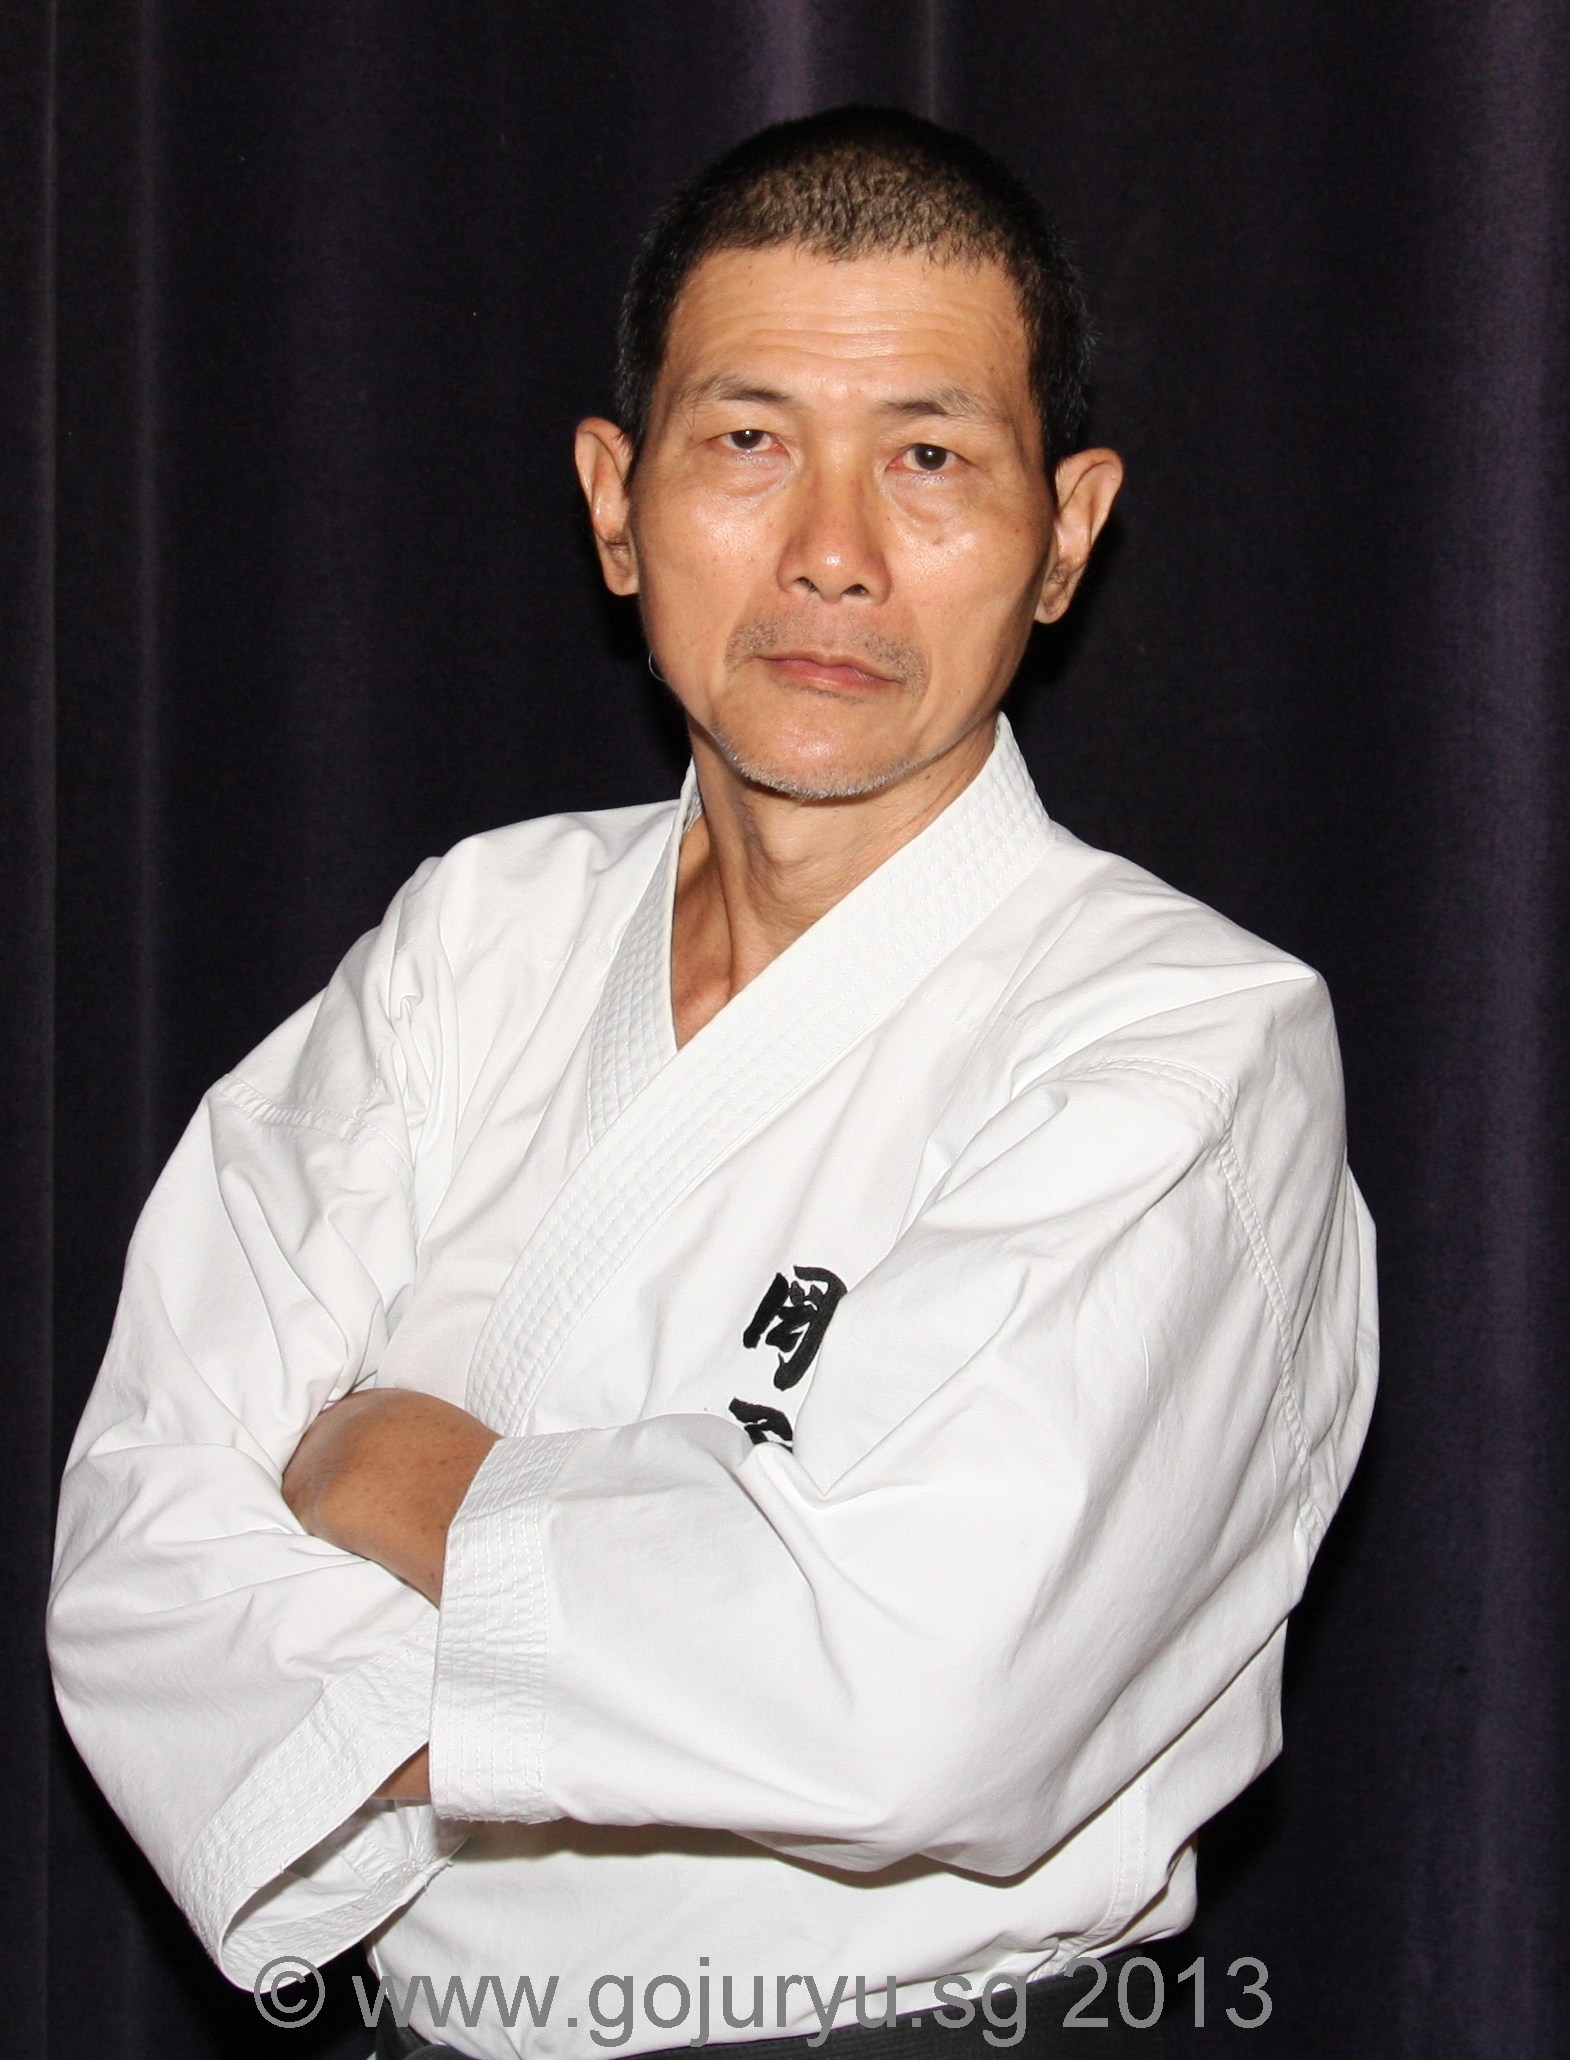 Technical Committee – Goju-Ryu Karate-do Association Singapore